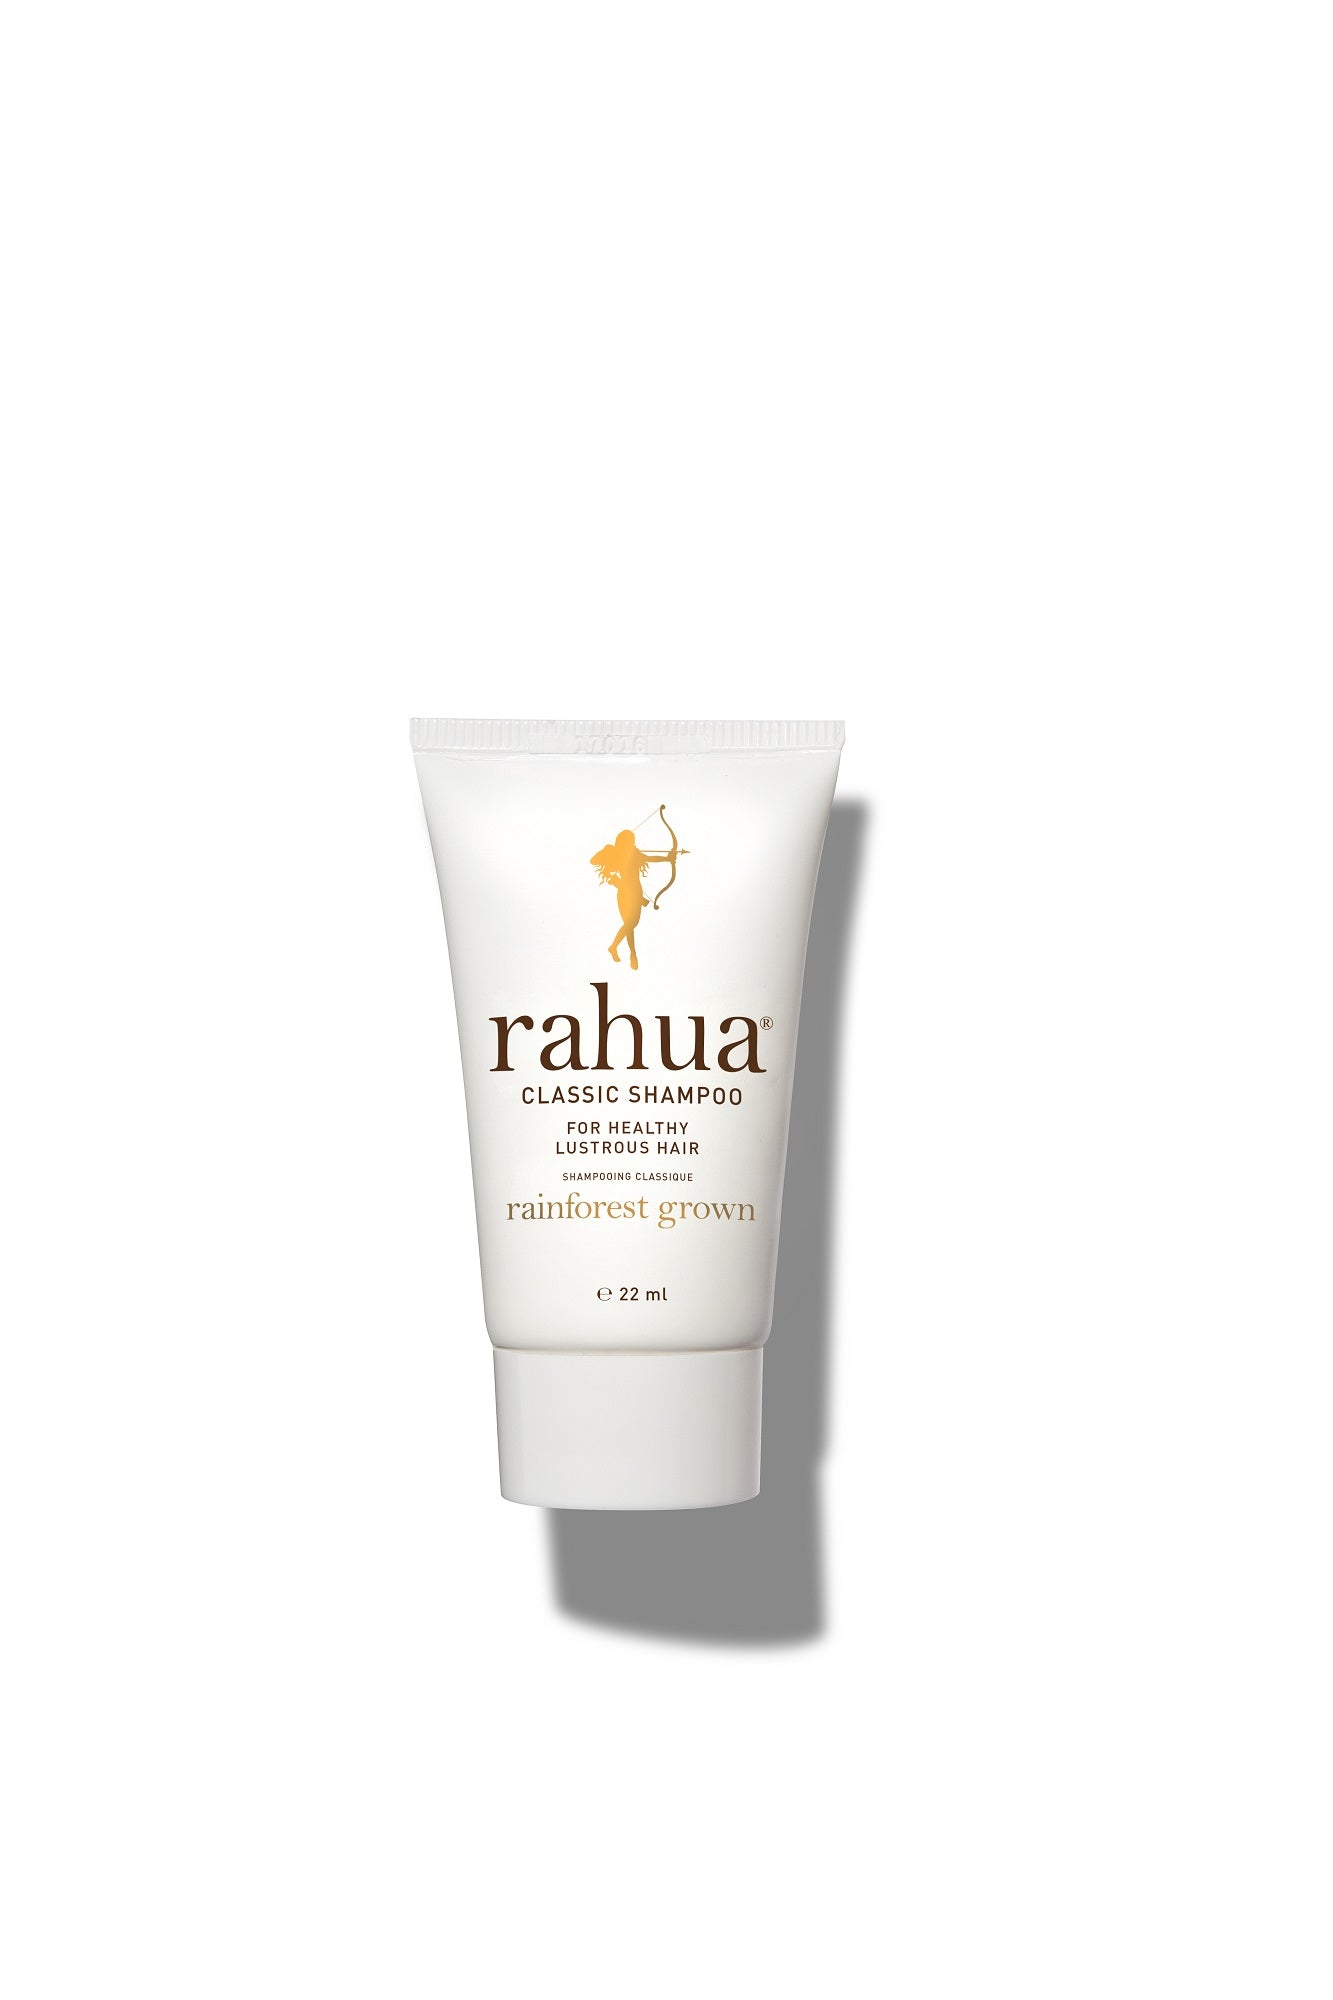 Rahua Classic Shampoo Deluxe Mini 22ml